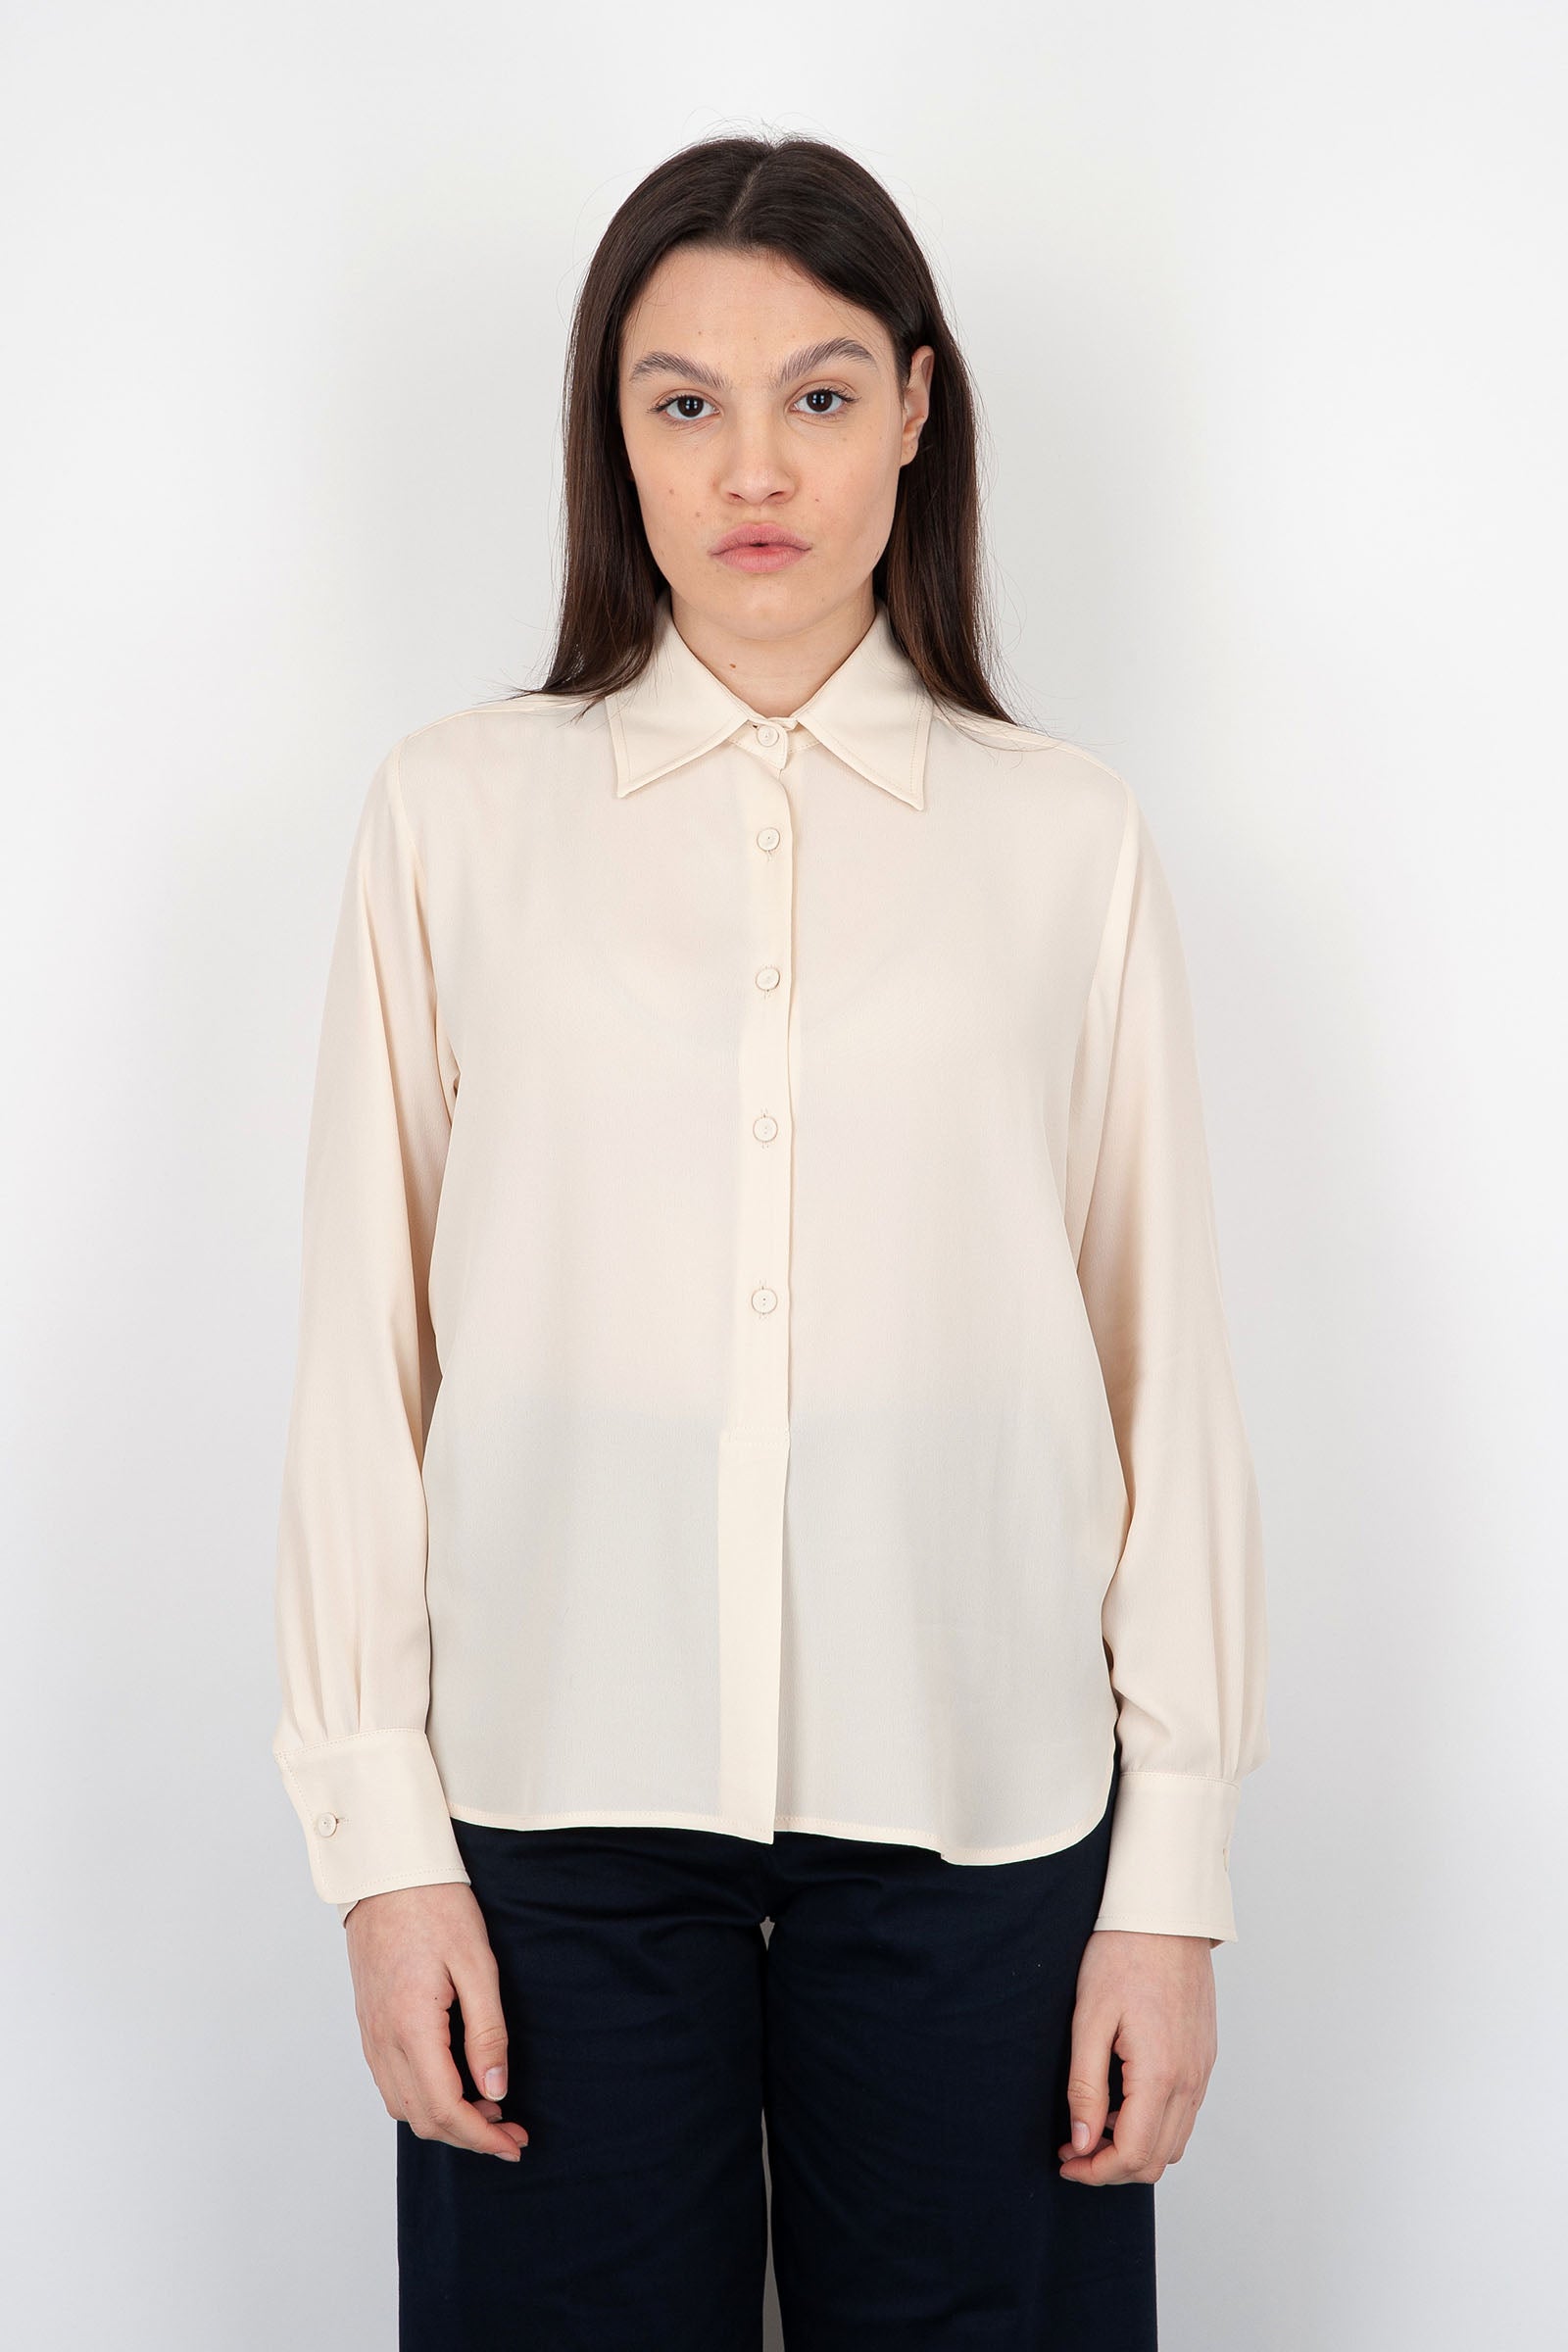 Grifoni Silk Cream Polo Shirt - 1